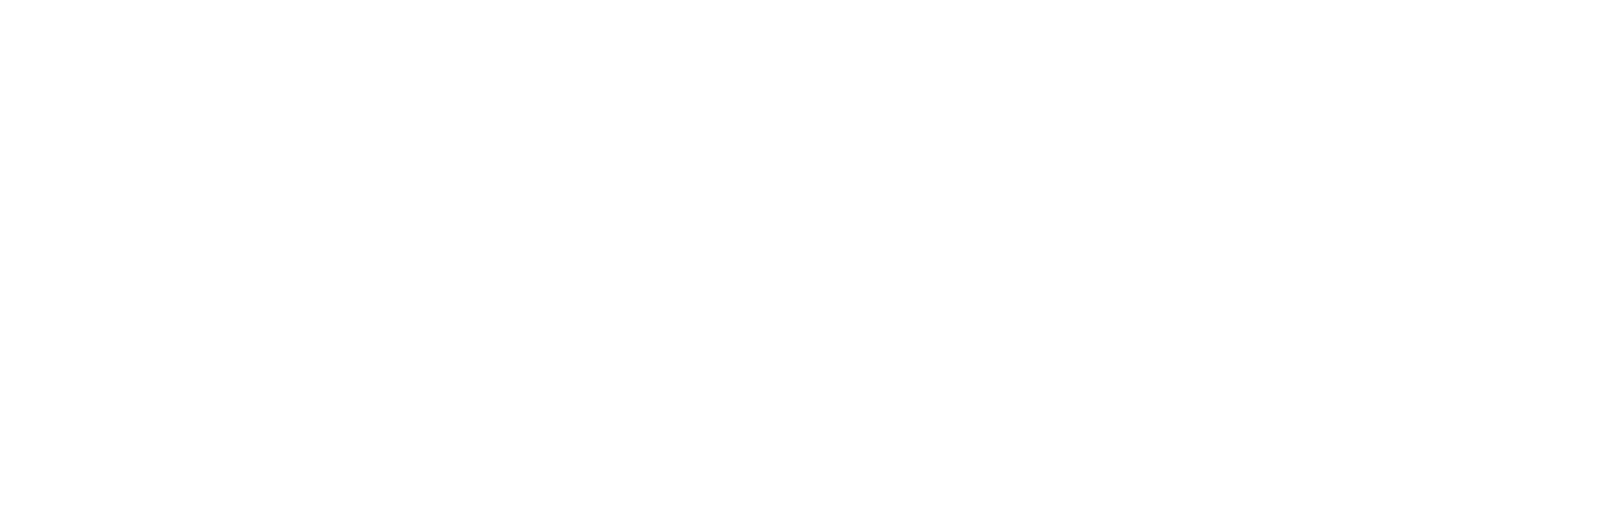 Enconnex InfiniRack receives Cabling Innovators Awards Platinum Honoree